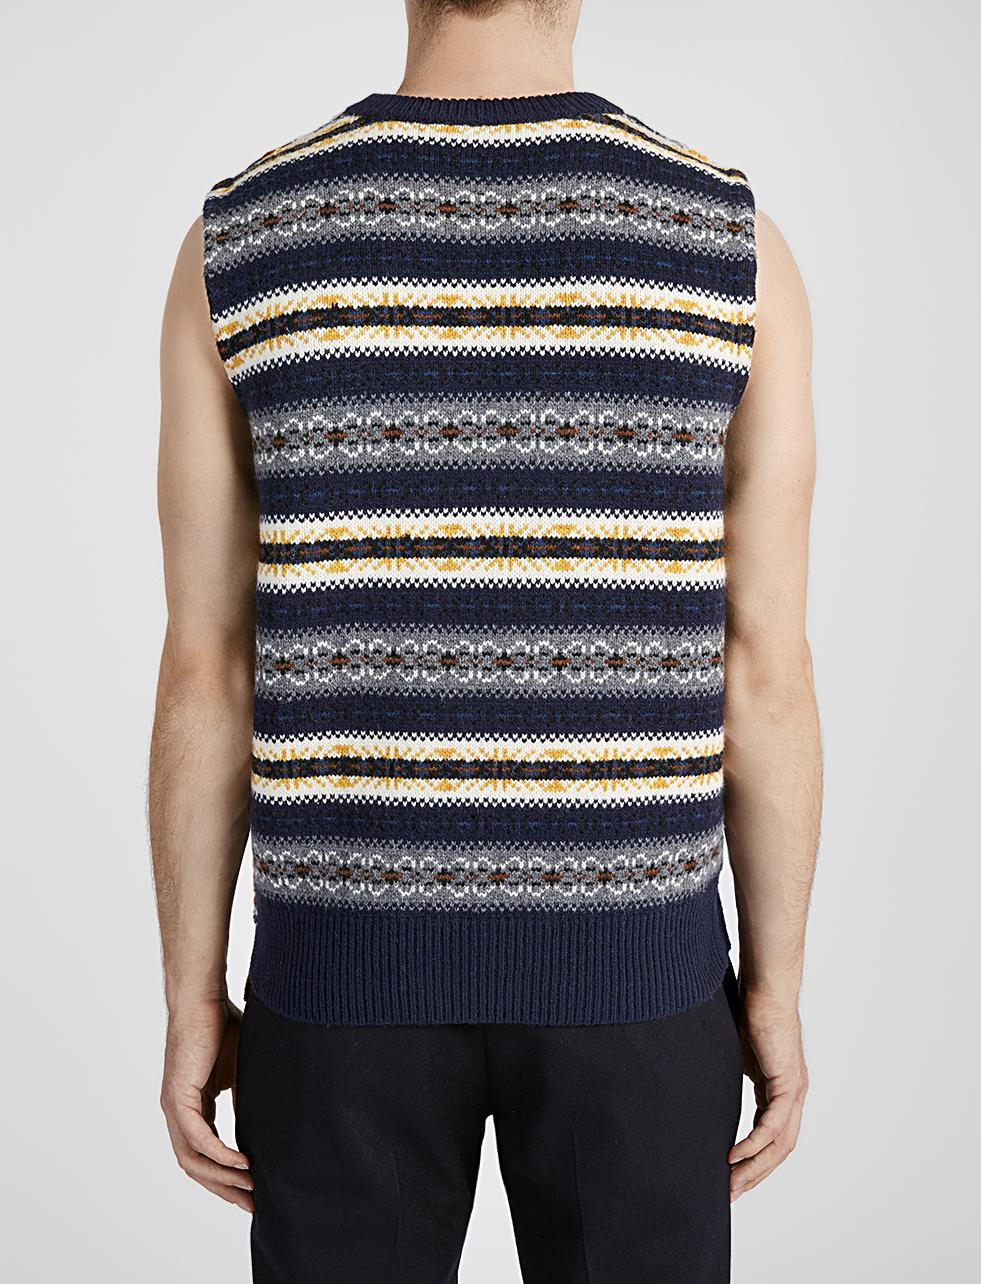 JOSEPH Wool Fair Isle Sleeveless Sweater for Men - Lyst